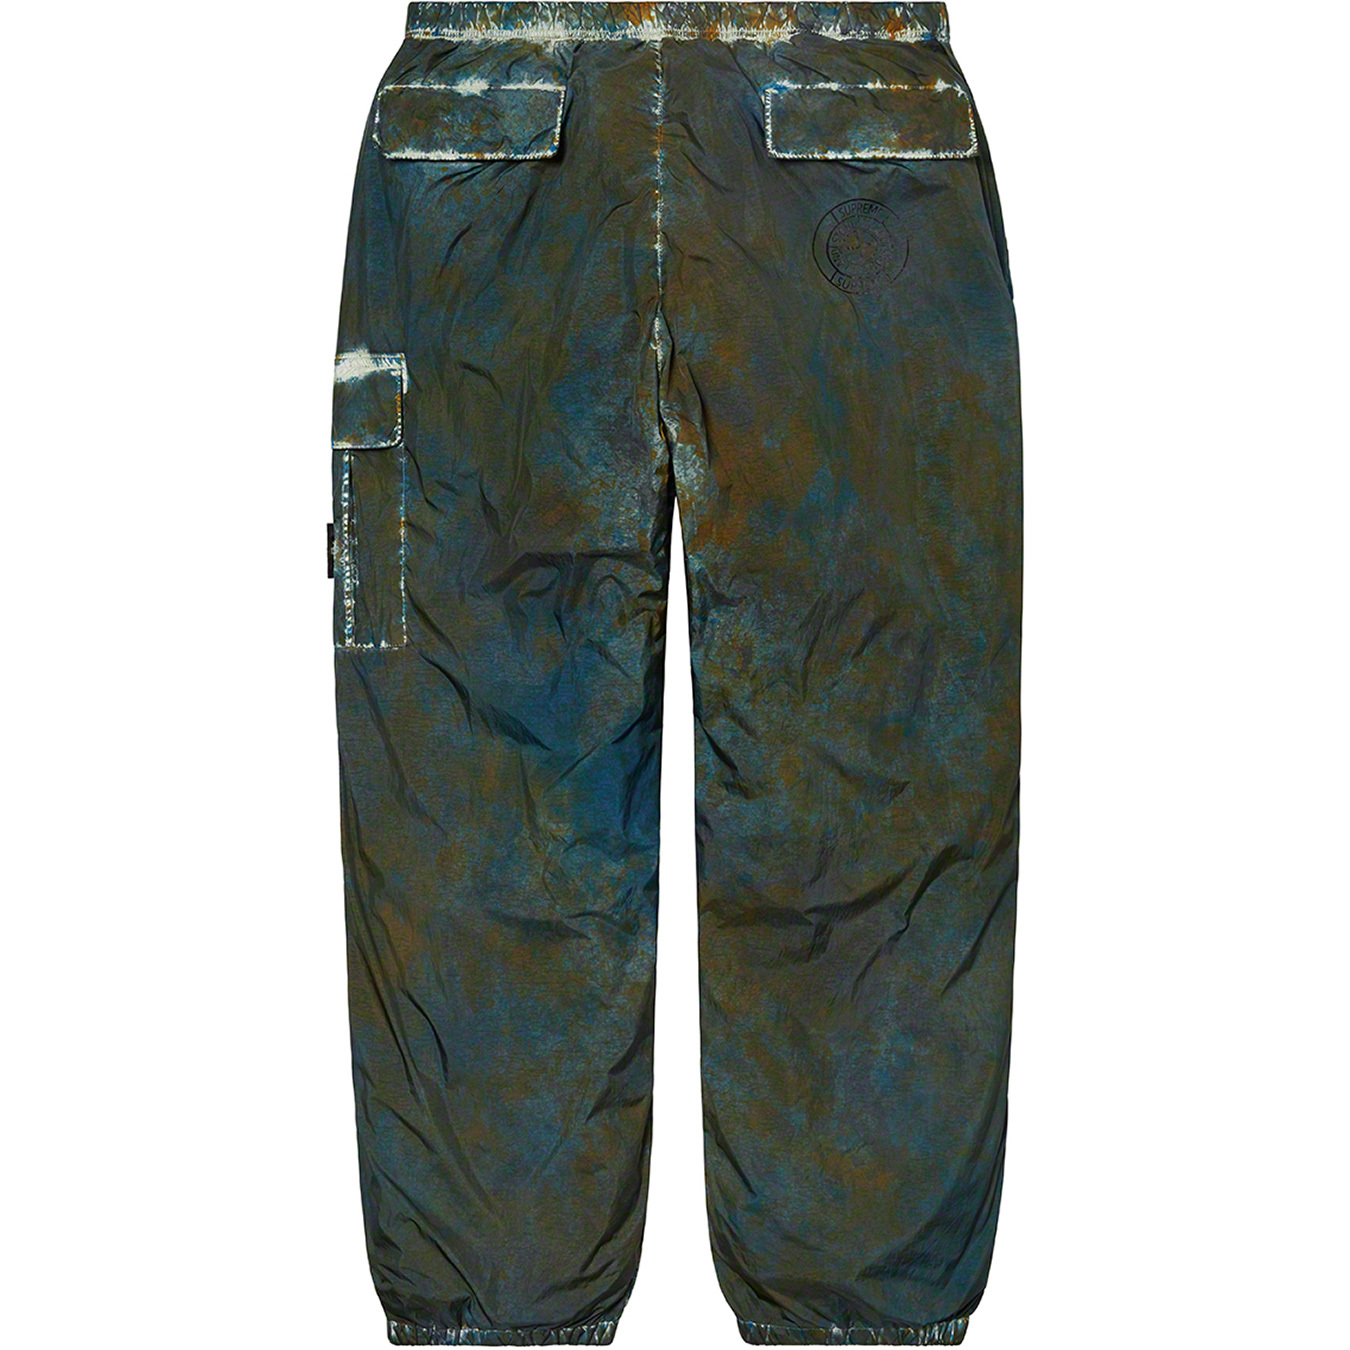 Supreme®/Stone Island® Painted Camo Nylon Cargo Pant